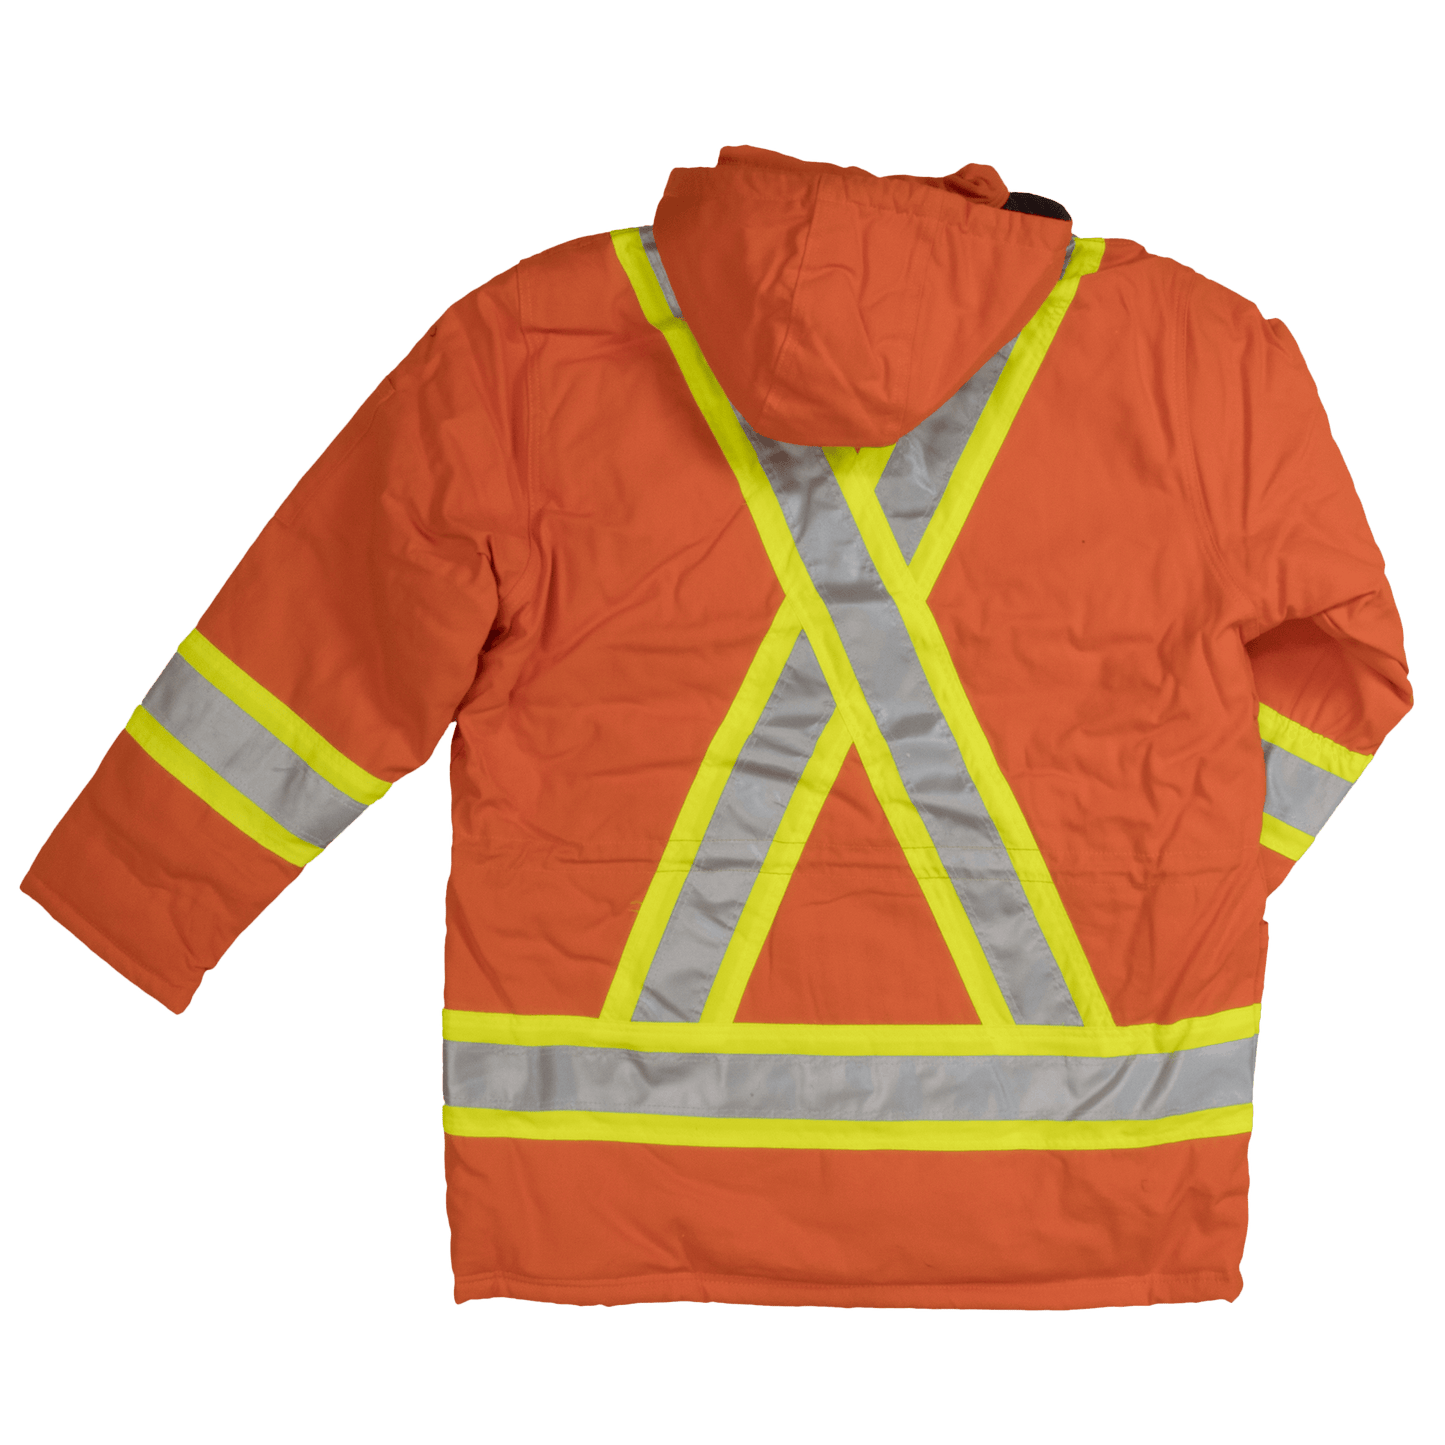 Tough Duck Fleece Lined Safety Jacket - S157 - Orange - back